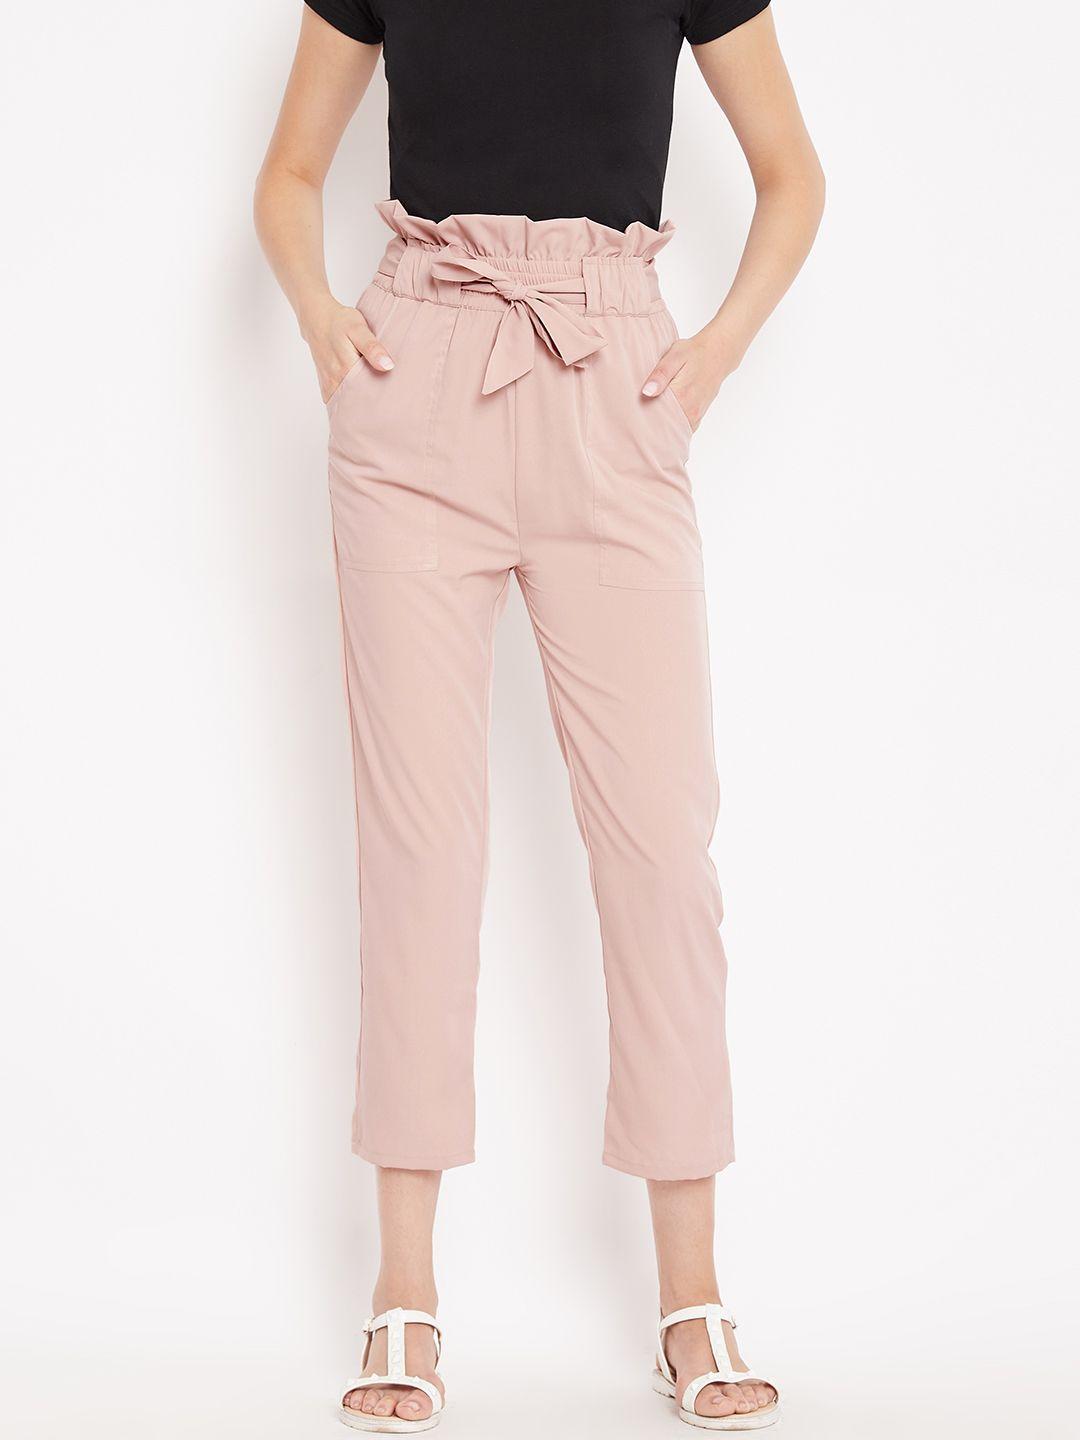 panit women dusty pink regular fit solid peg trousers